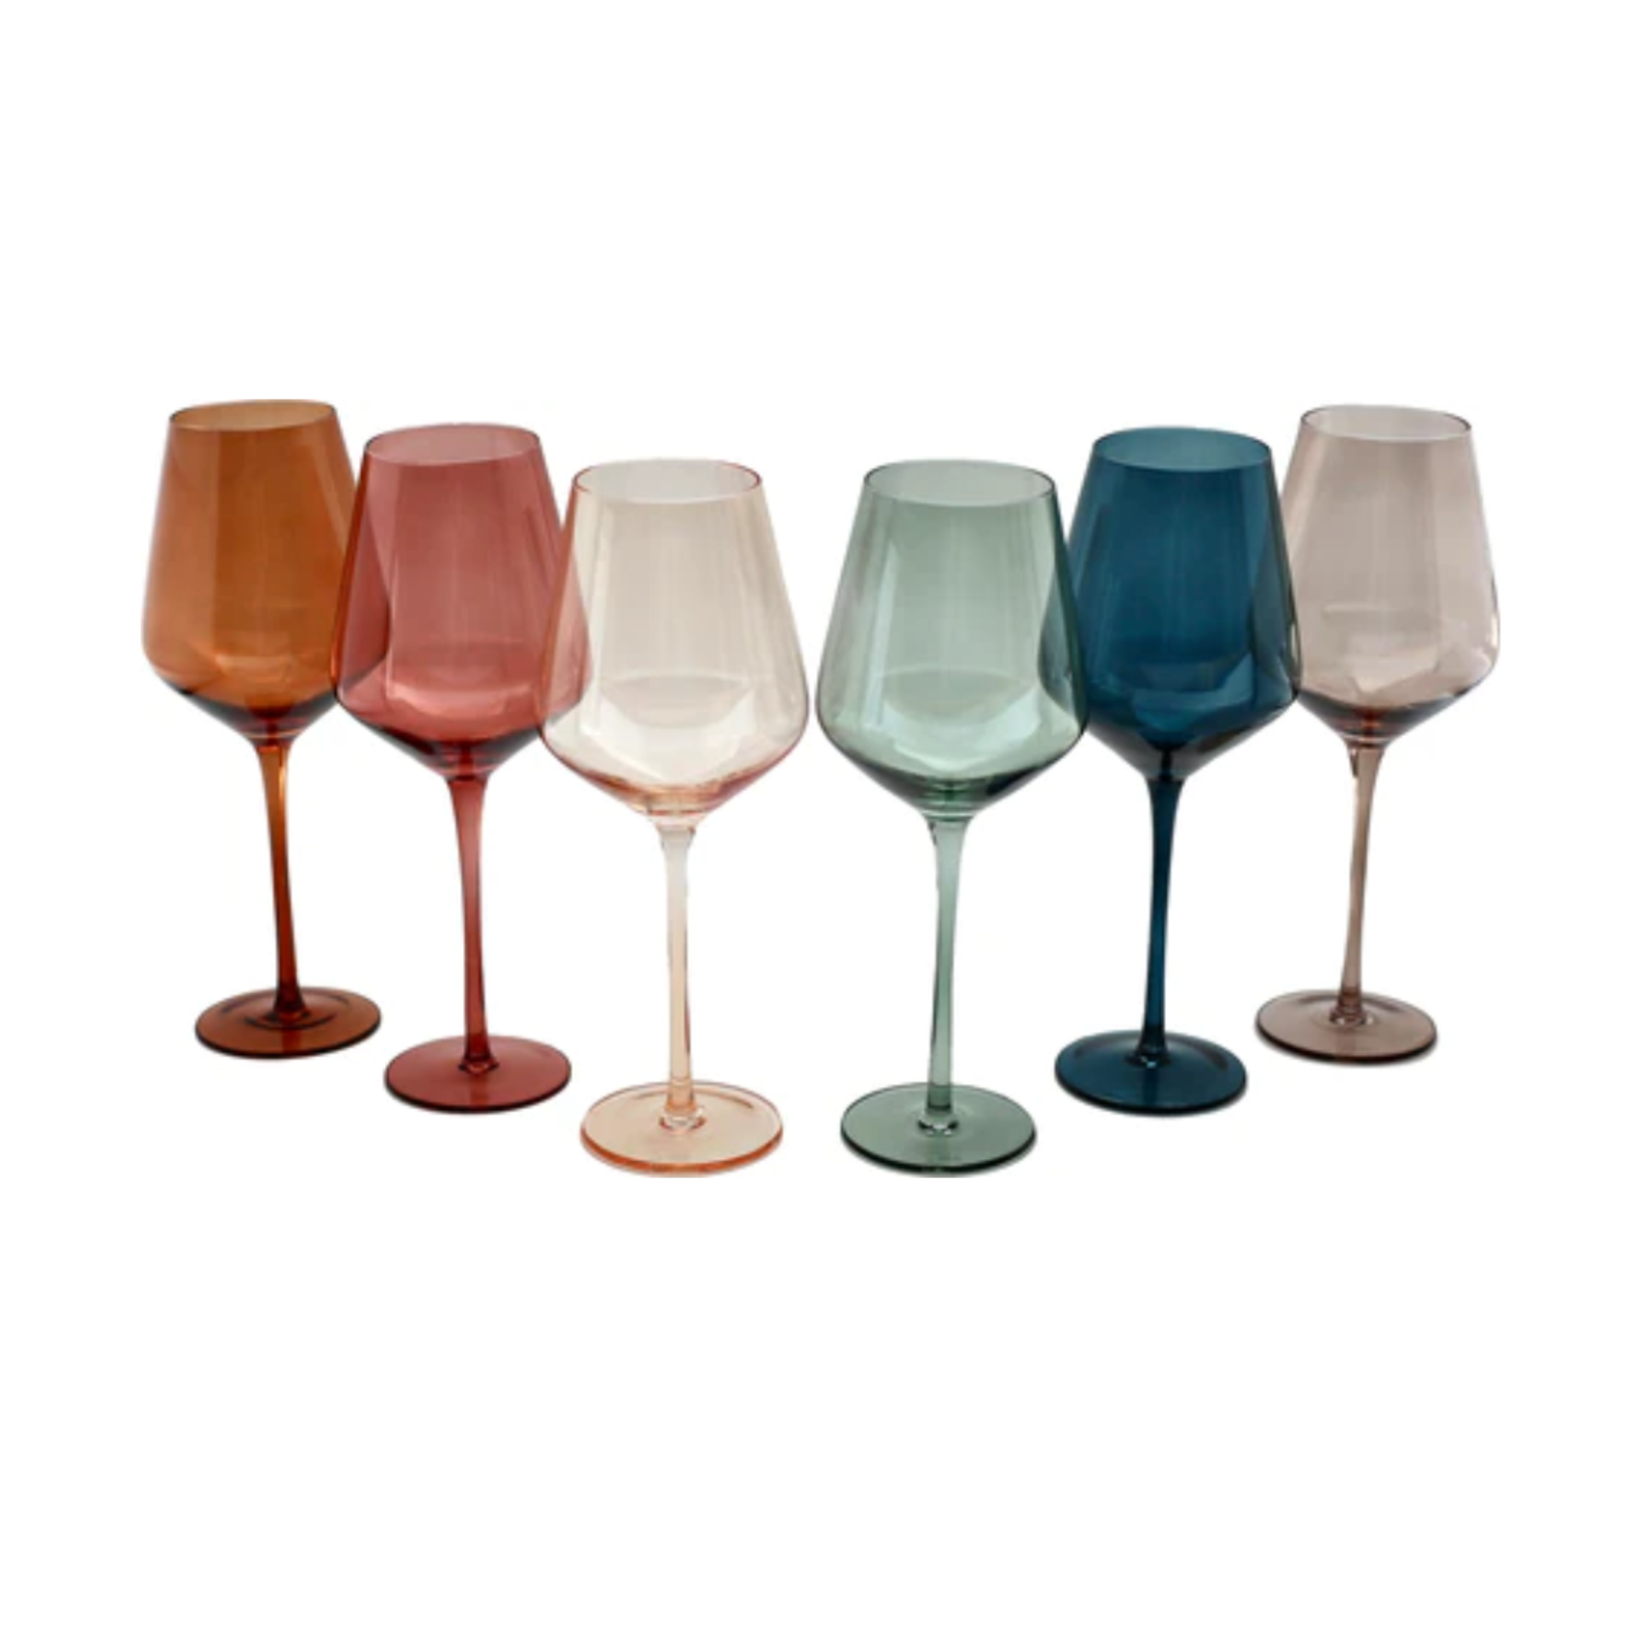 Handblown Wine Glasses - S/6